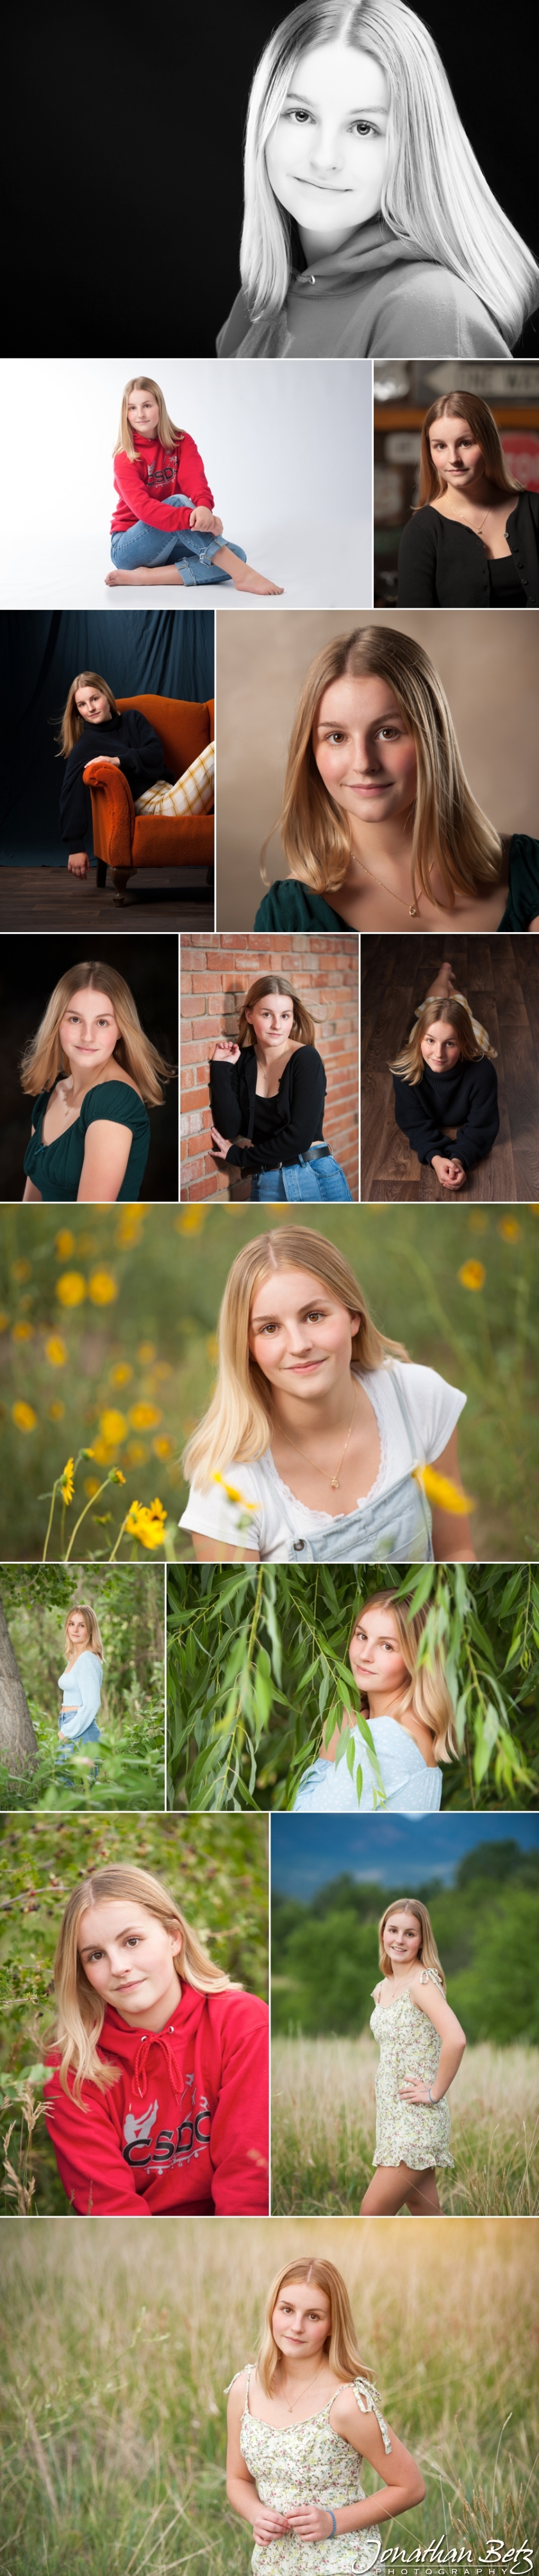 Colorado Springs High School Senior Portraits In-Studio and Outdoors